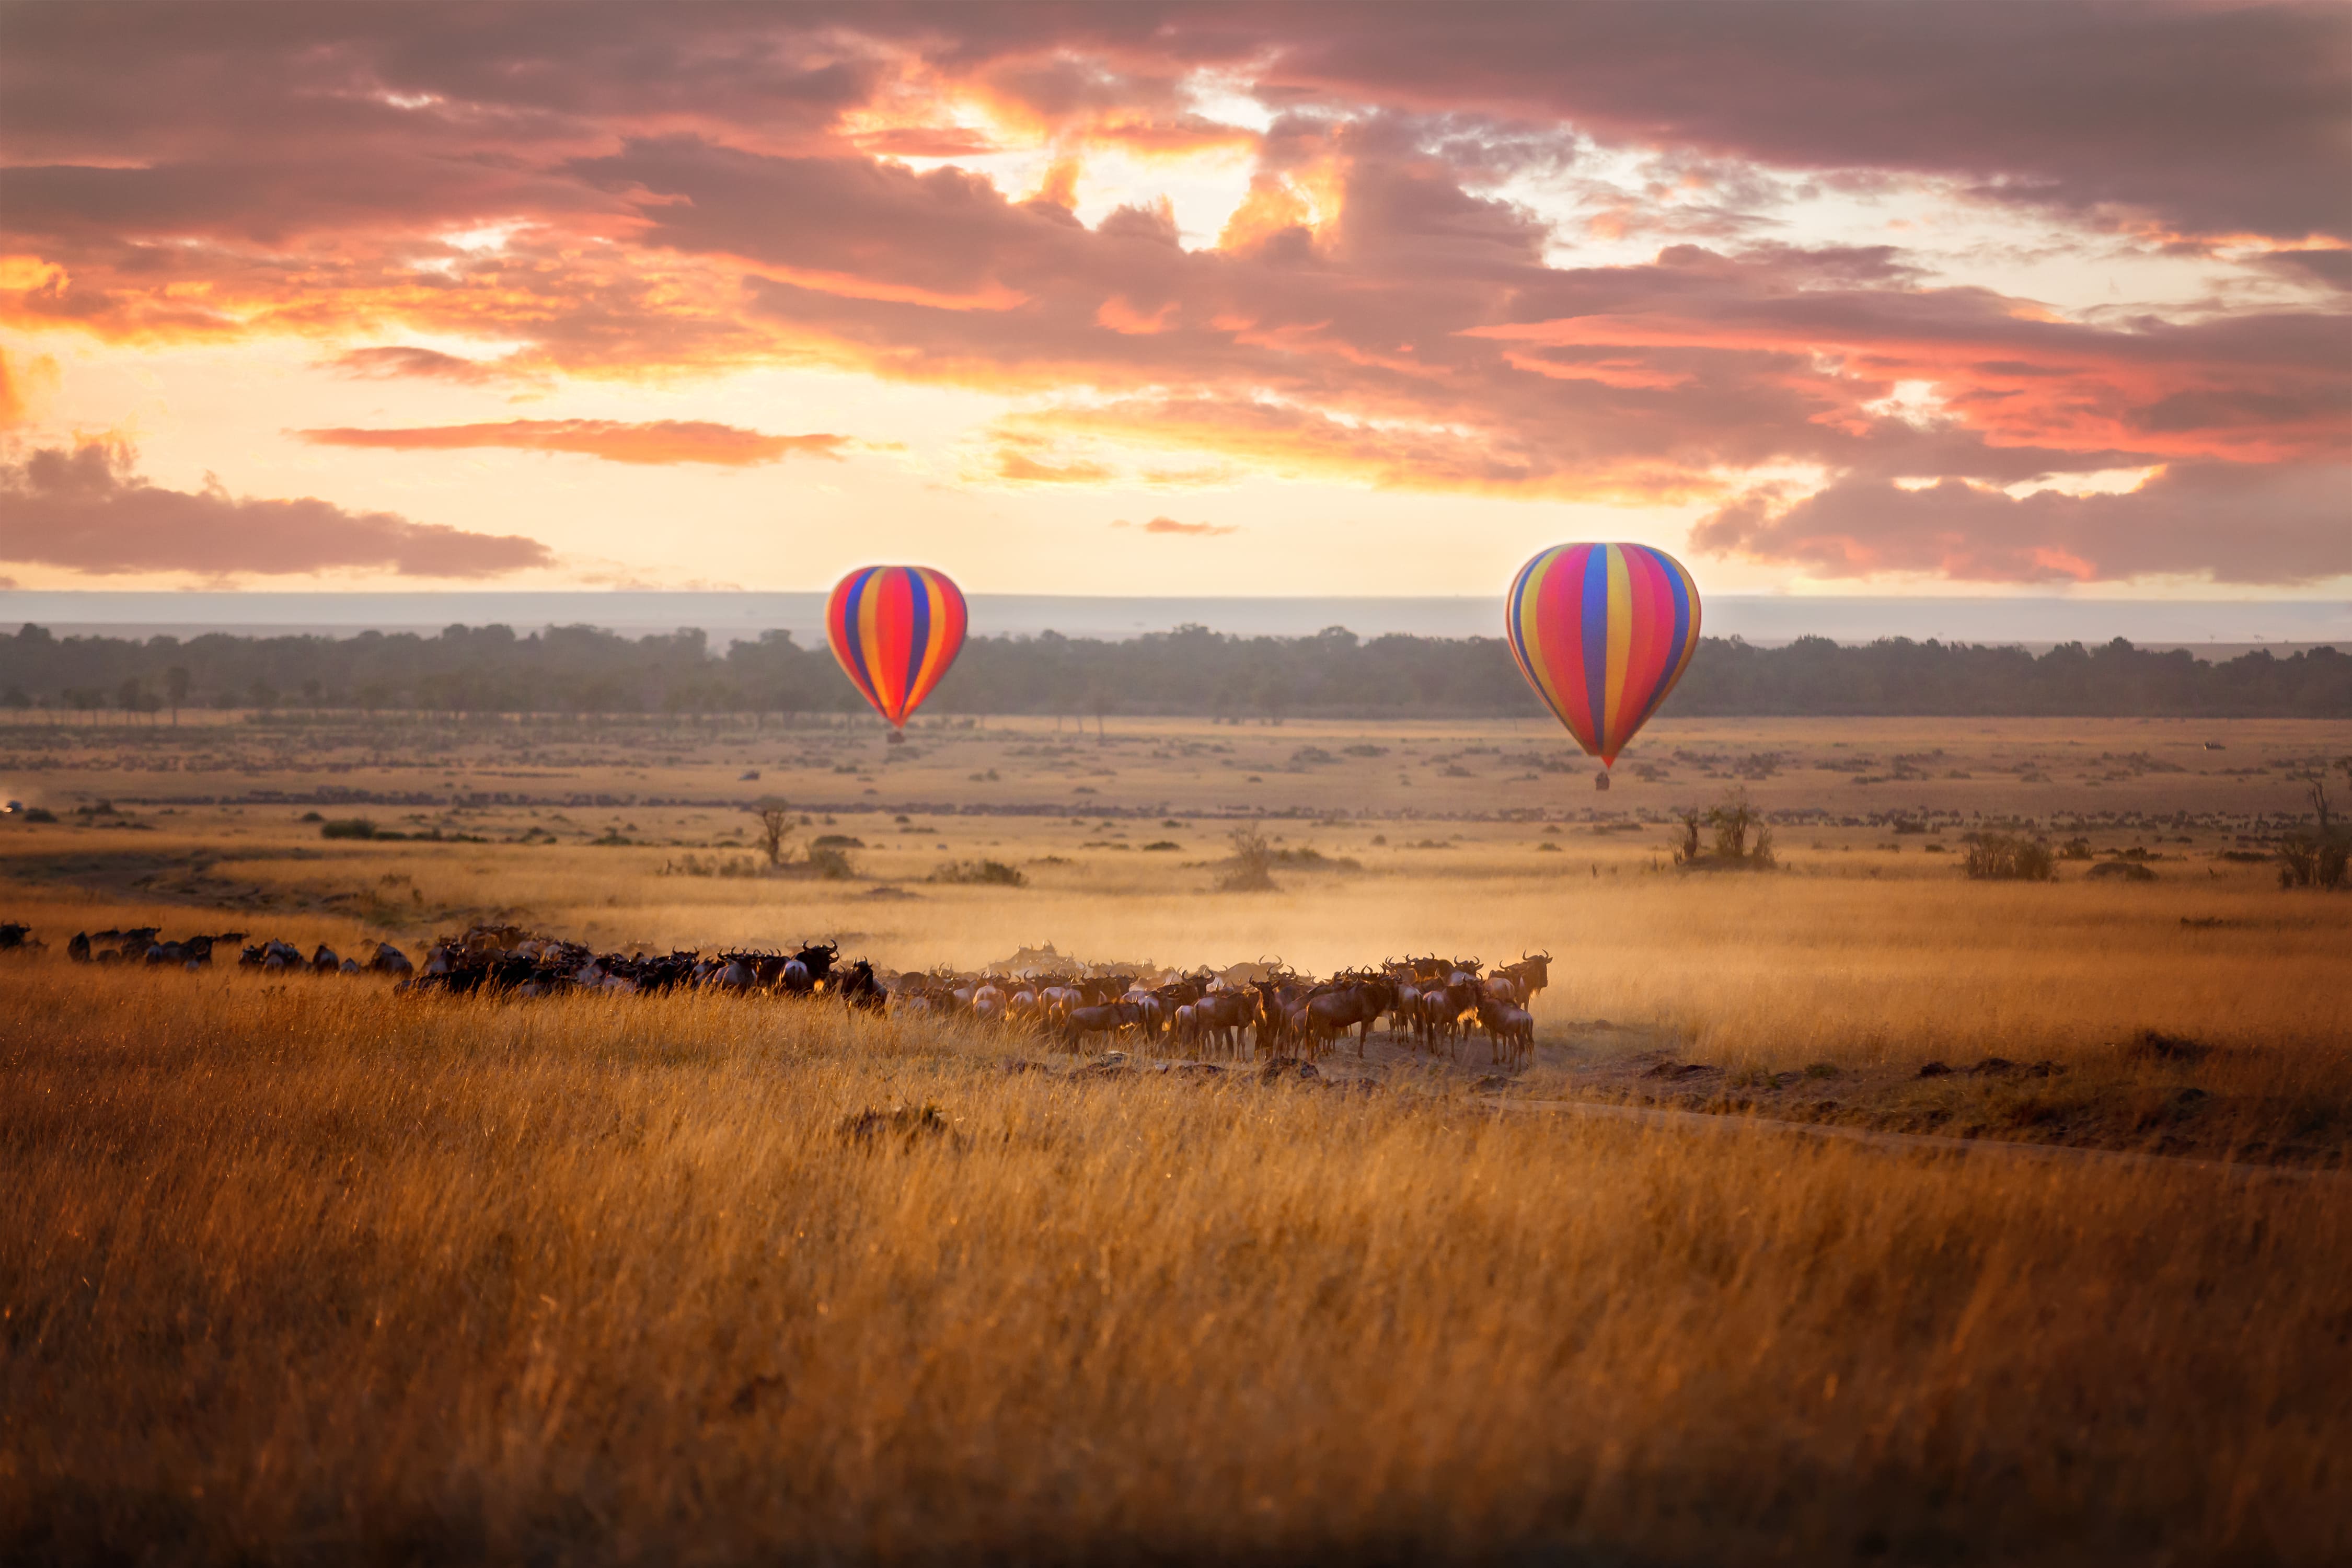 Maasai Mara National Reserve.